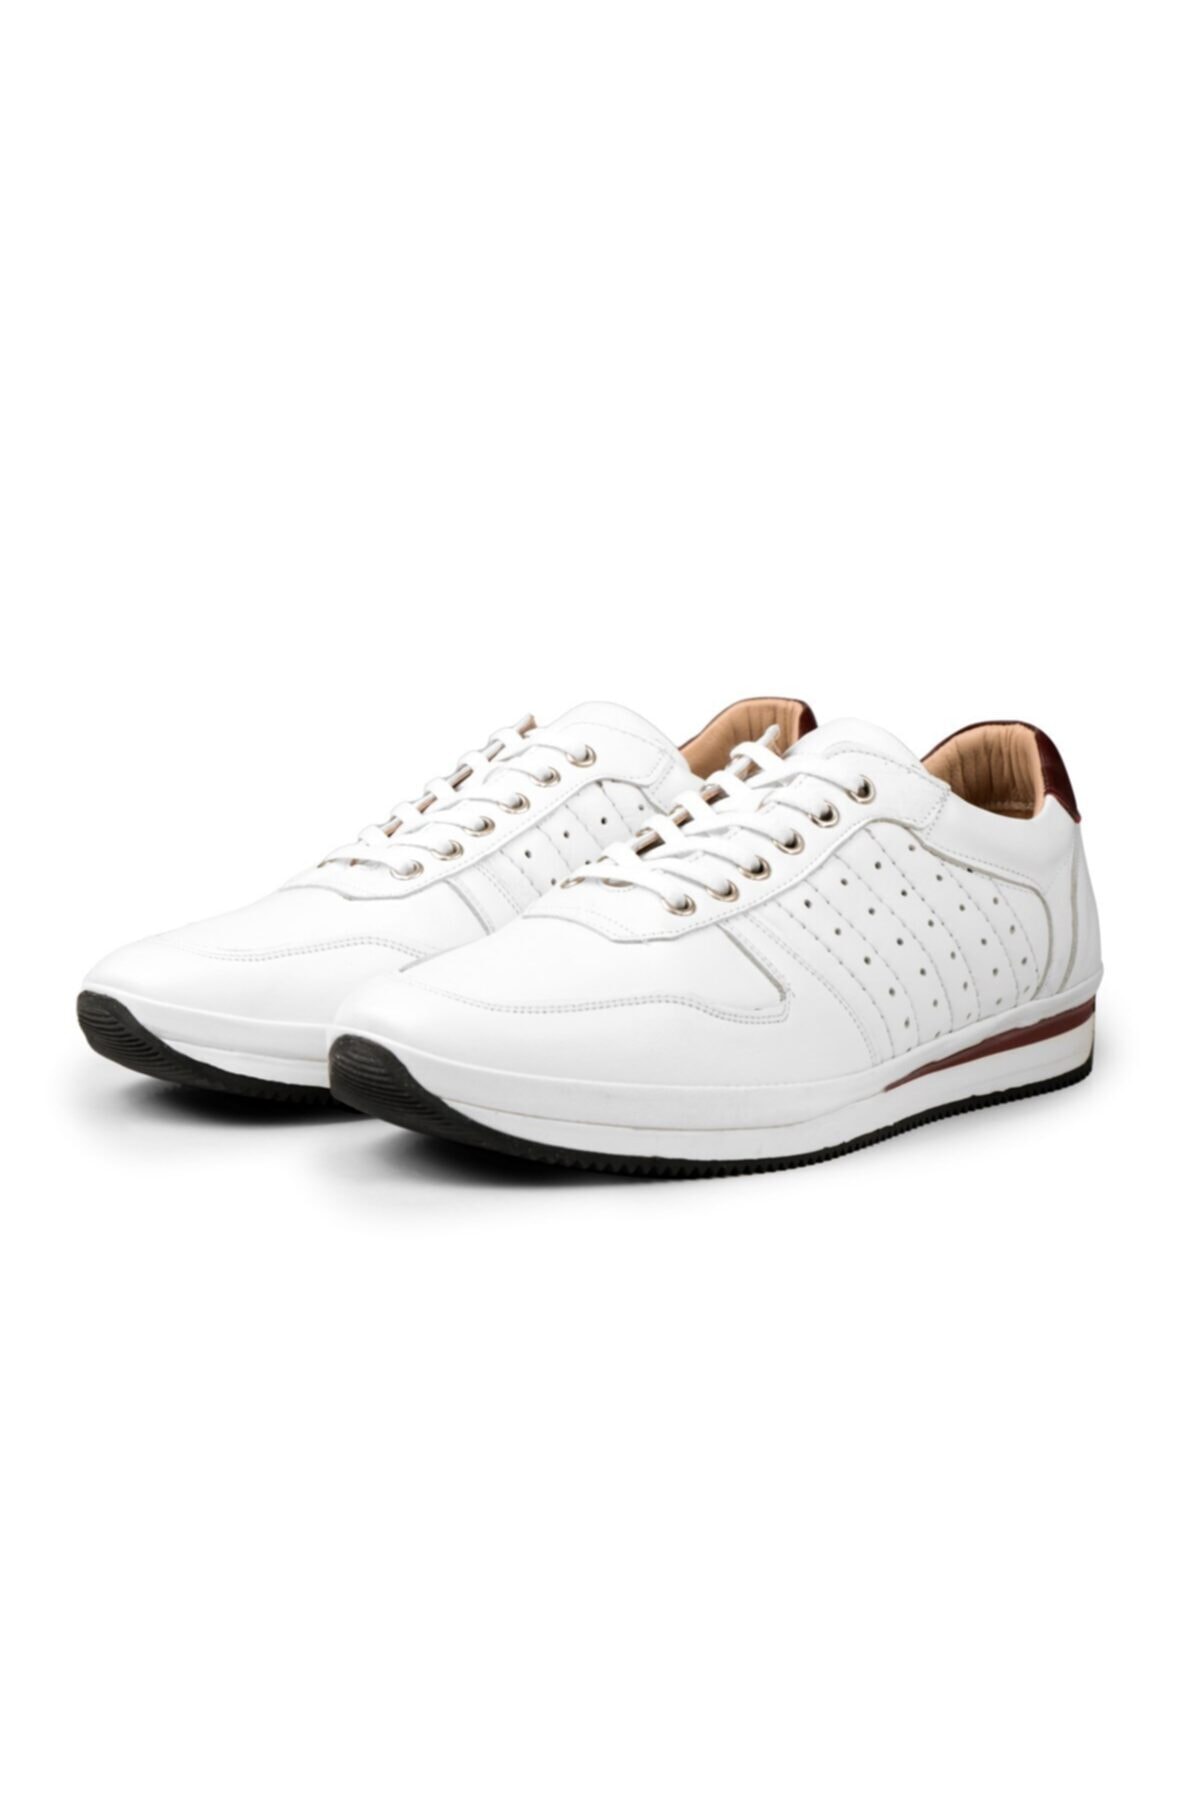 Levně Ducavelli Cool Genuine Leather Men's Casual Shoes, Casual Shoes, 100% Leather Shoes All Seasons Shoes White.